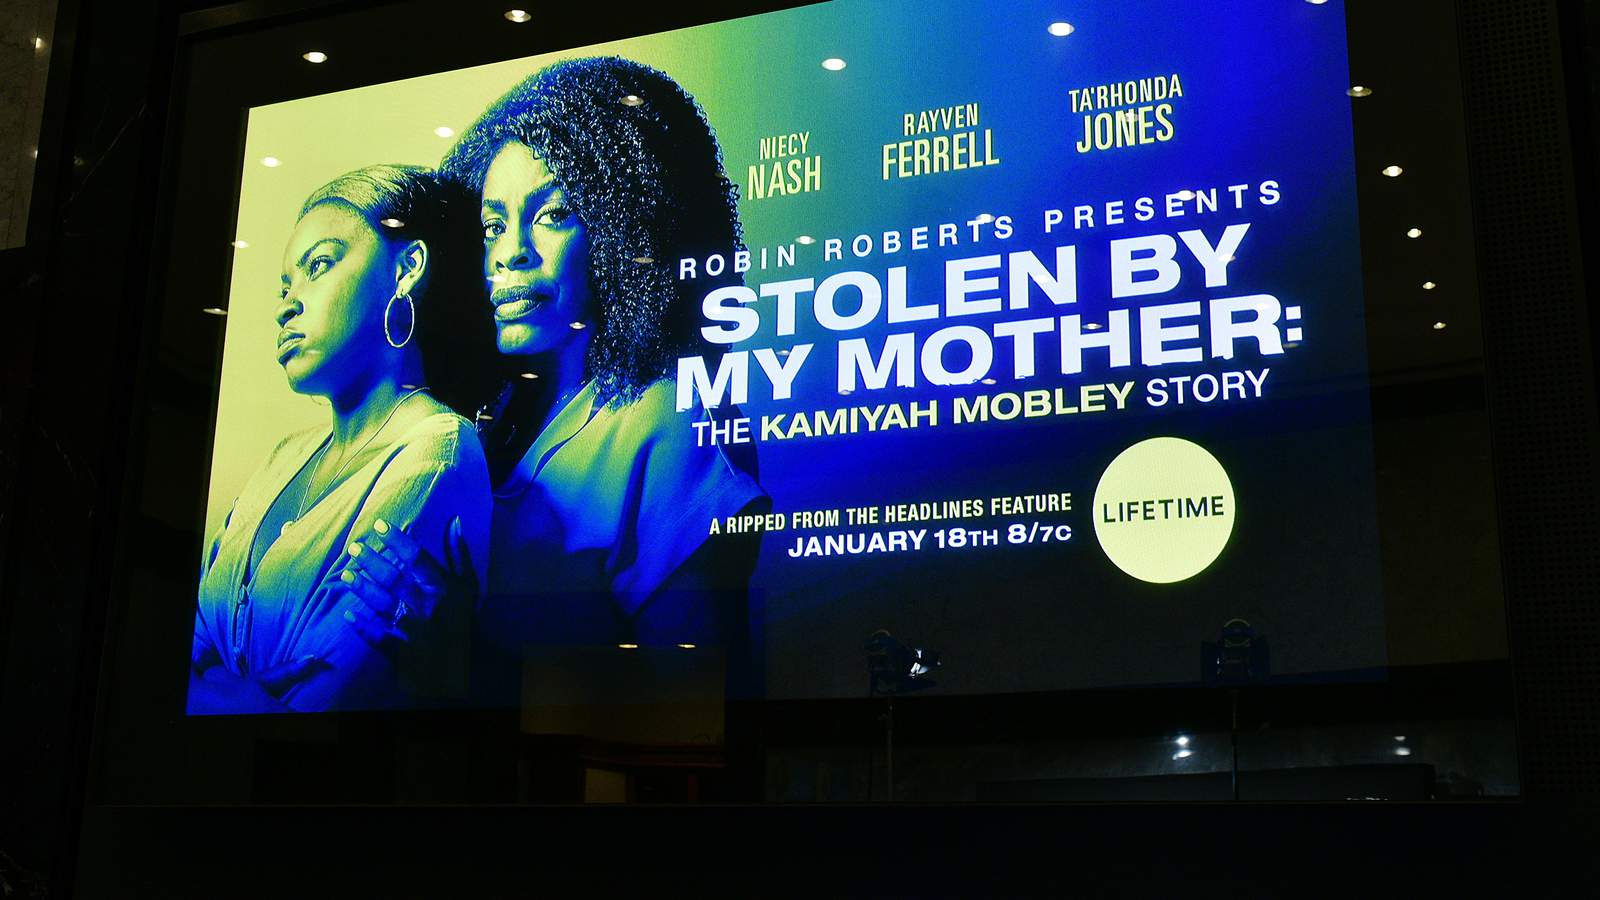 Lifetime’s Kamiyah Mobley movie debuts Saturday